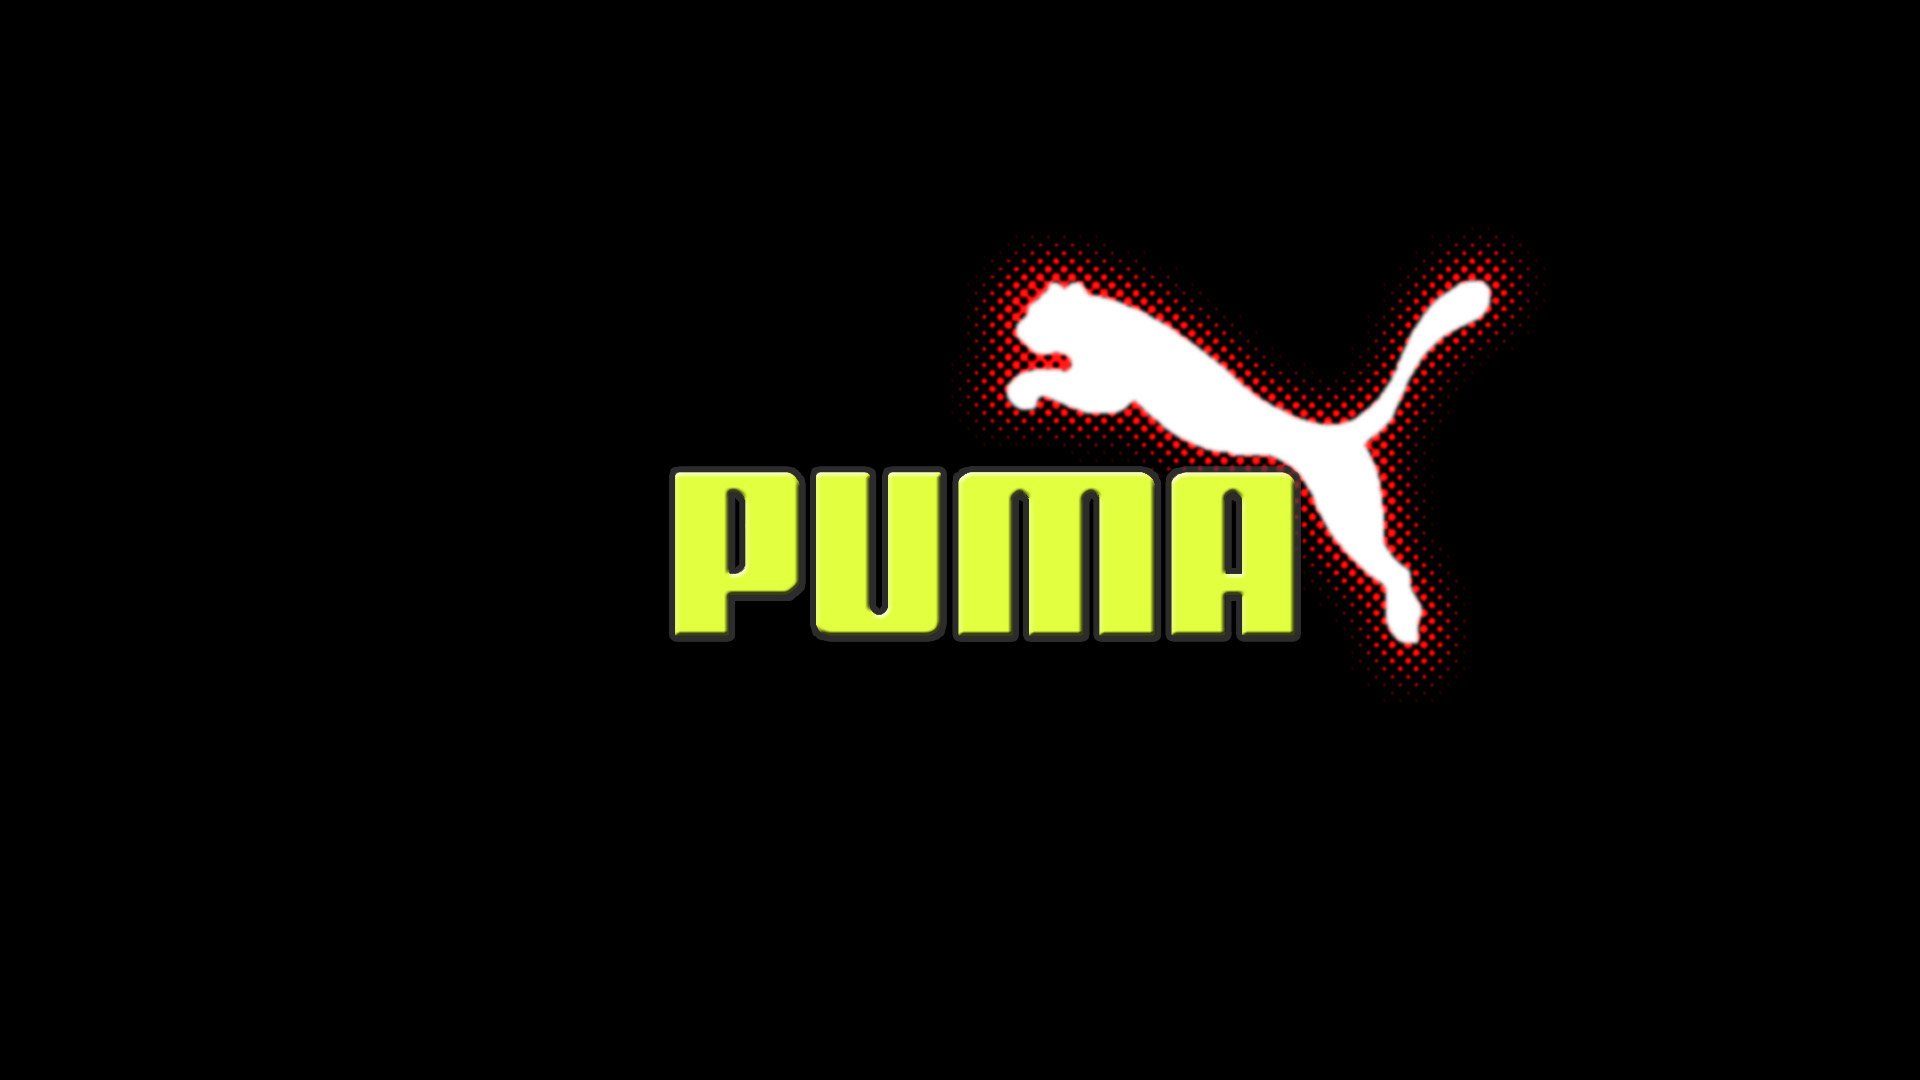 47+] Puma Wallpaper HD - WallpaperSafari